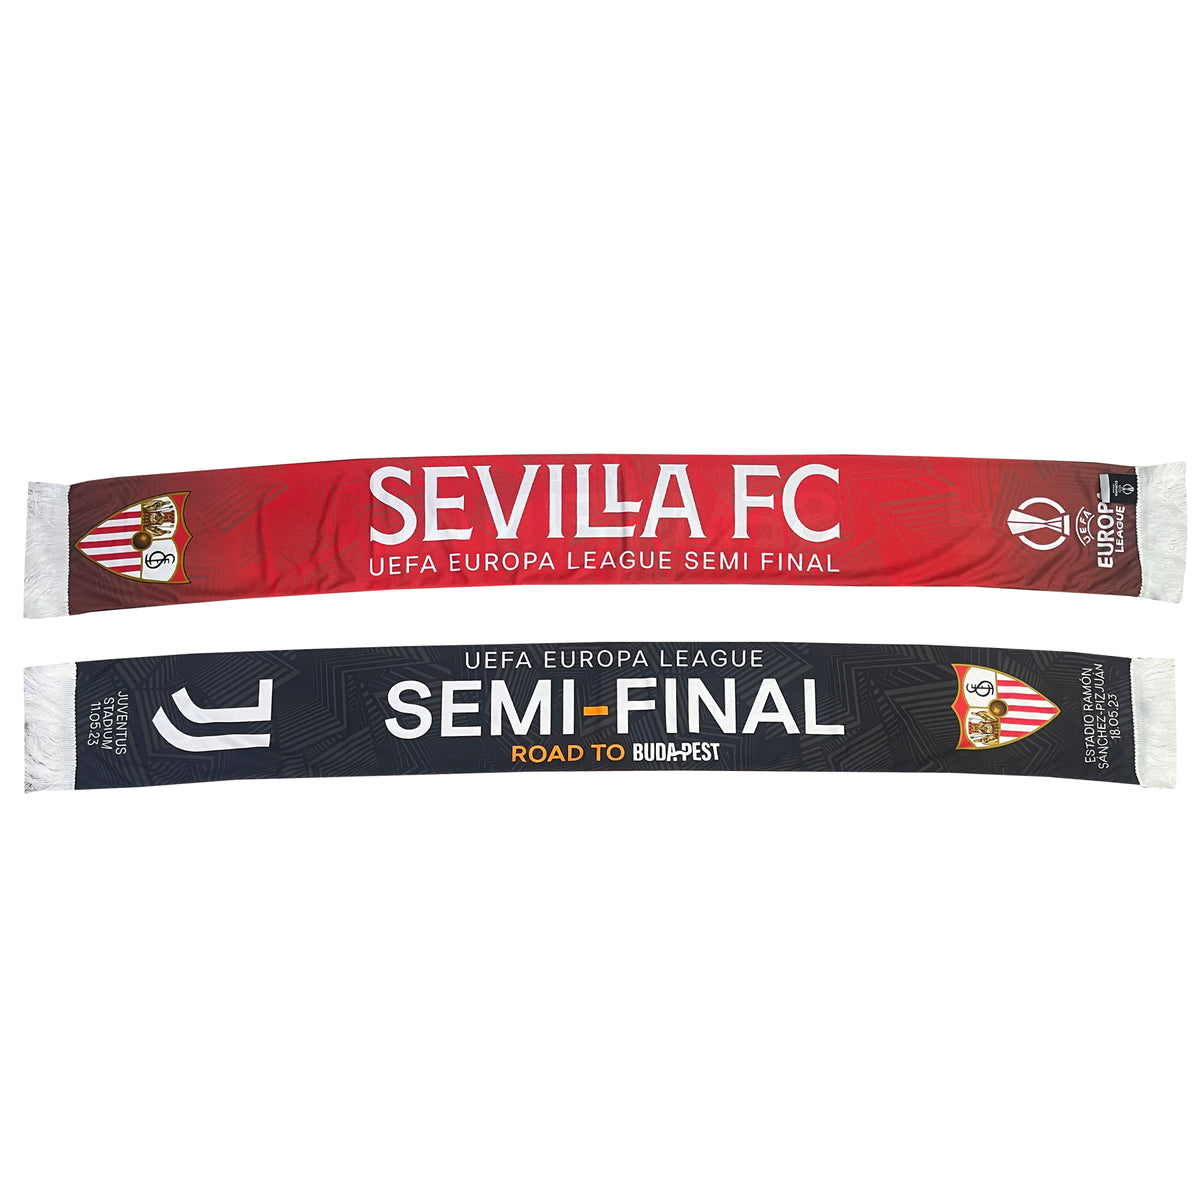 Europa League Semifinals - Juventus scarf